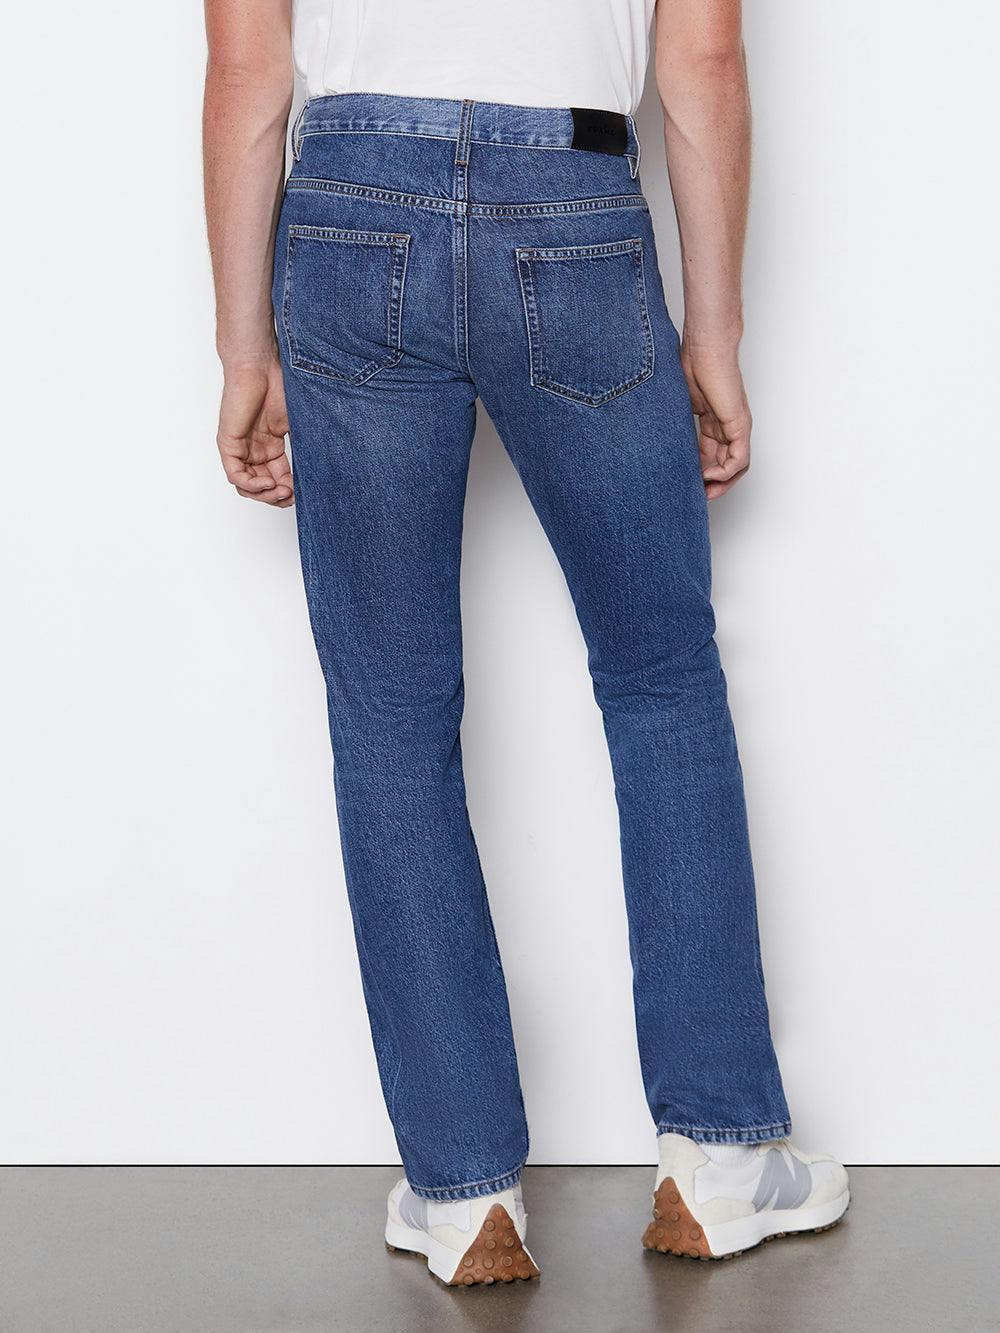 jeans back view alt:hove